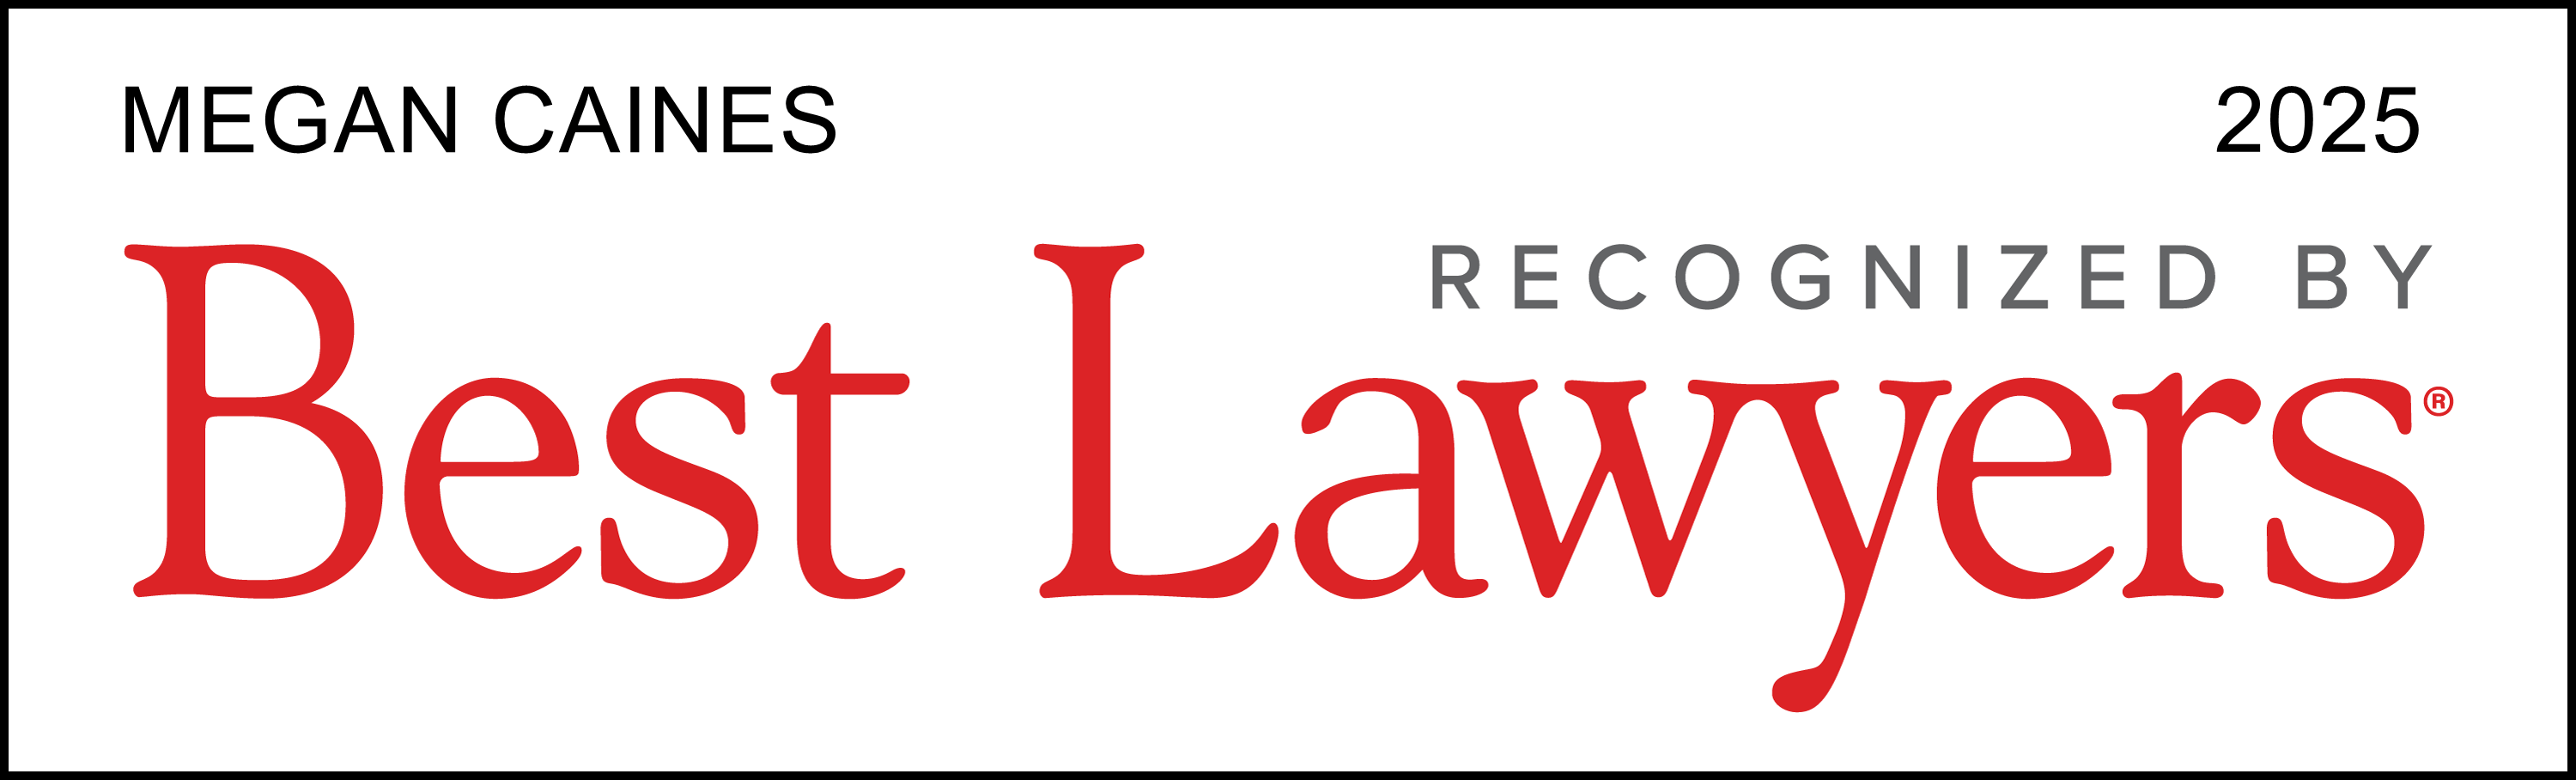 best-lawyers-lawyer-logo-megan-2025